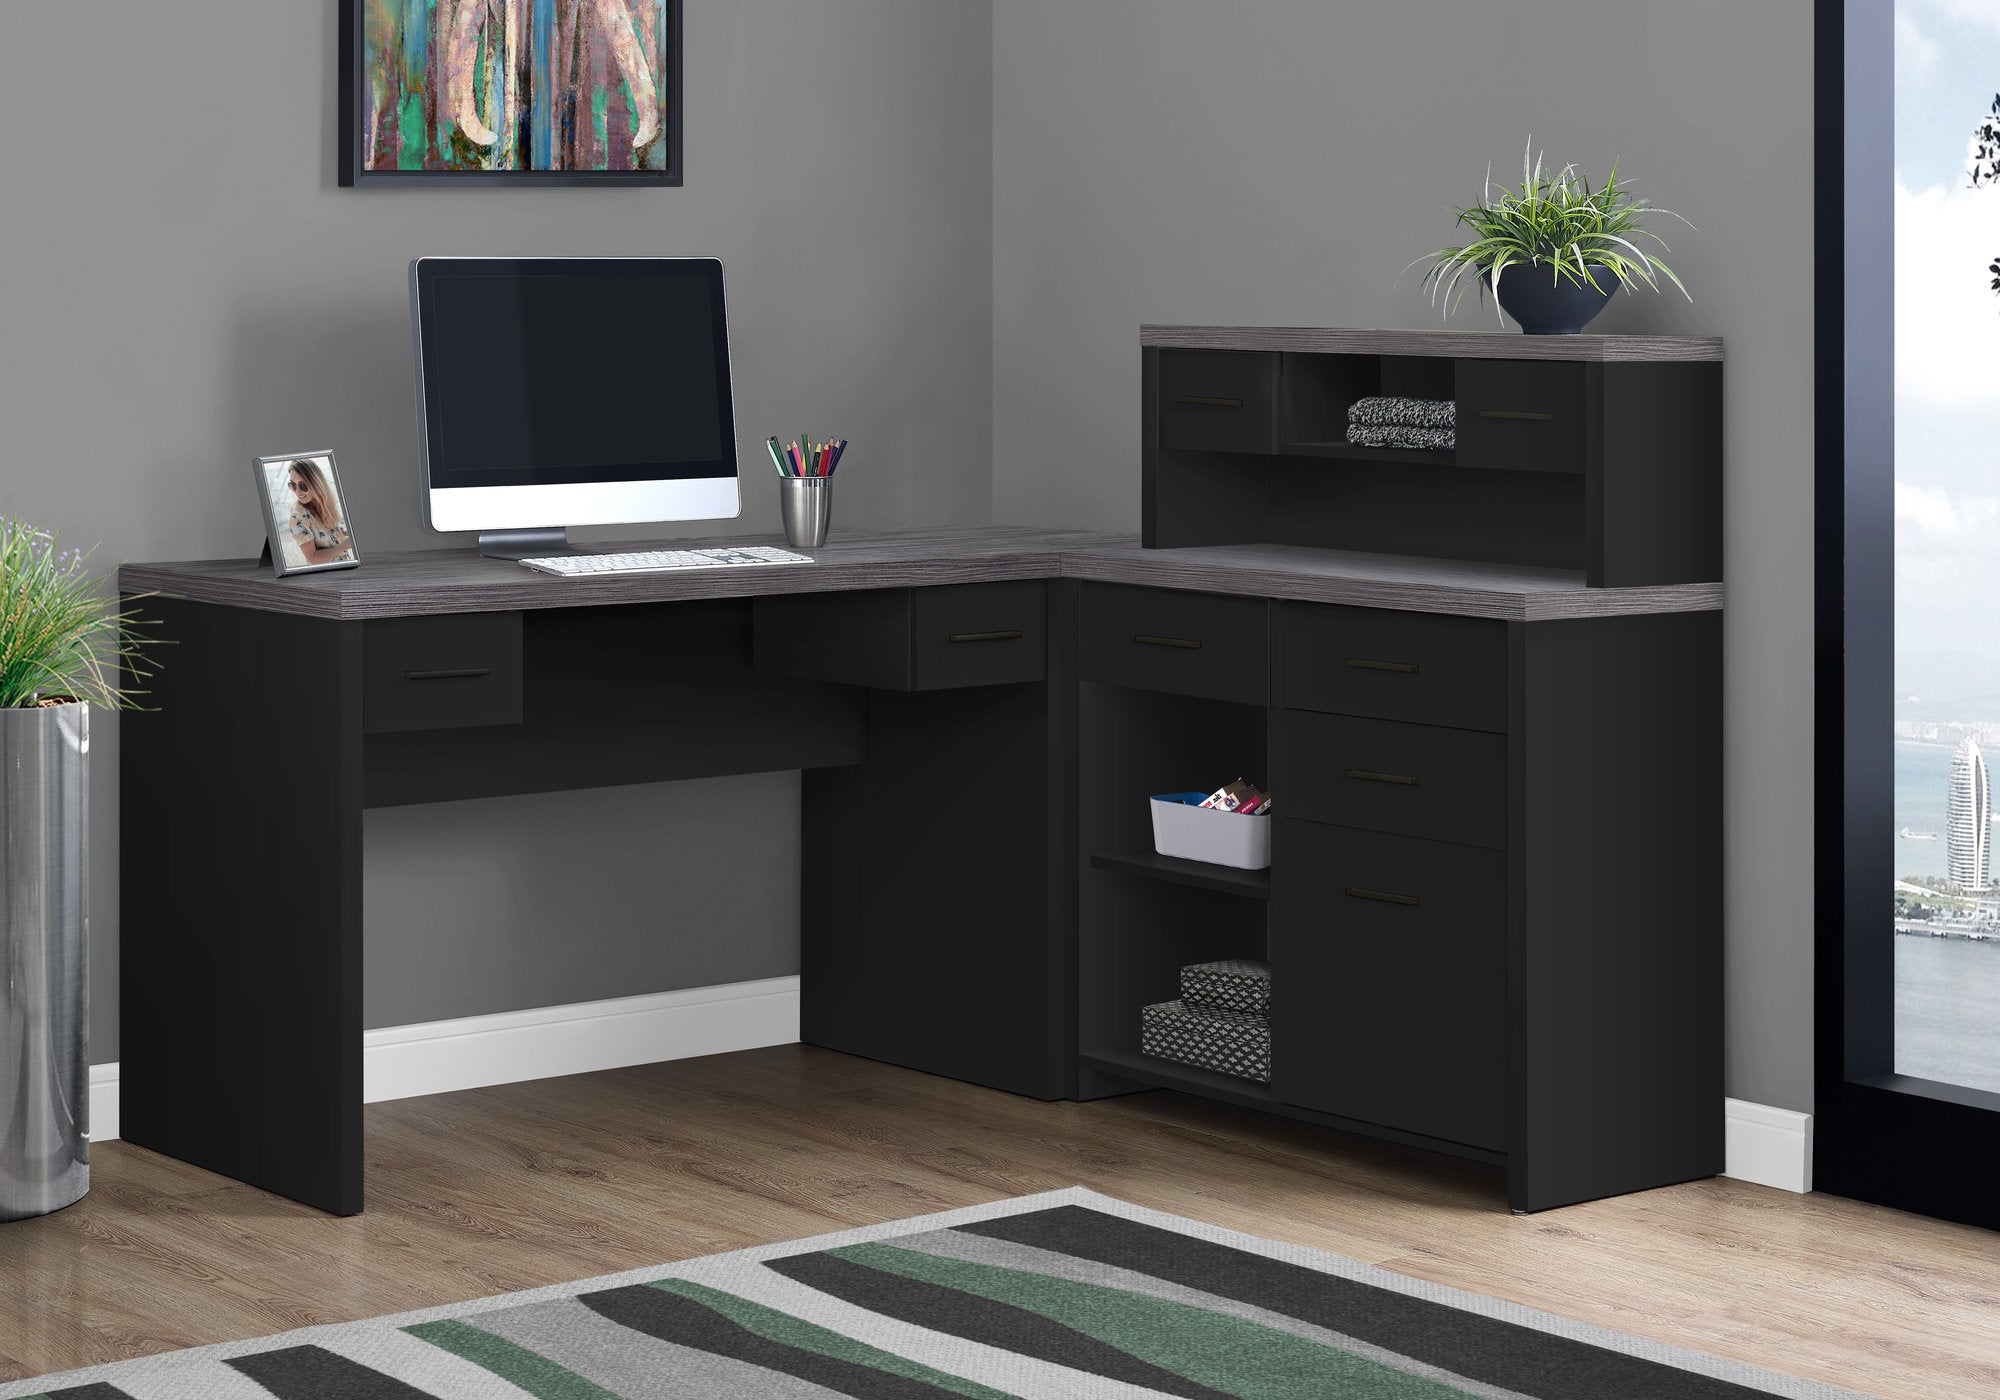 MN-937430    Computer Desk, Home Office, Corner, Left, Right Set-Up, Storage Drawers, L Shape, Laminate, Black, Grey, Contemporary, Modern